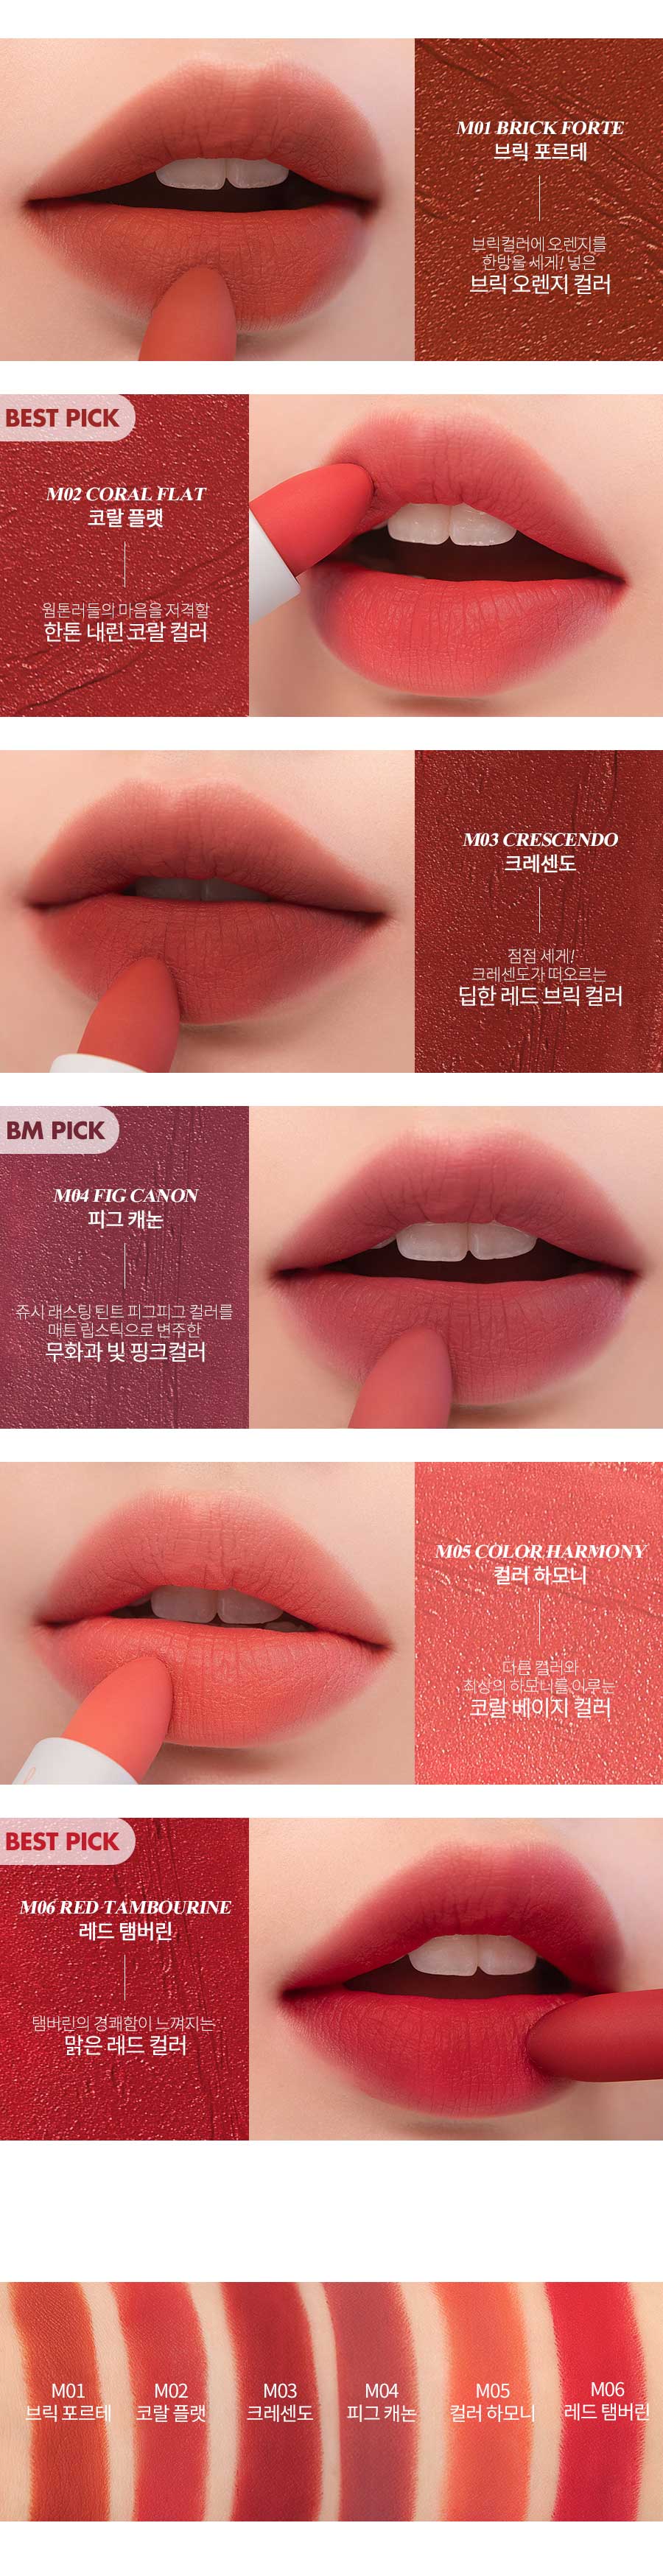 Korean Cosmetics - Your Beauty